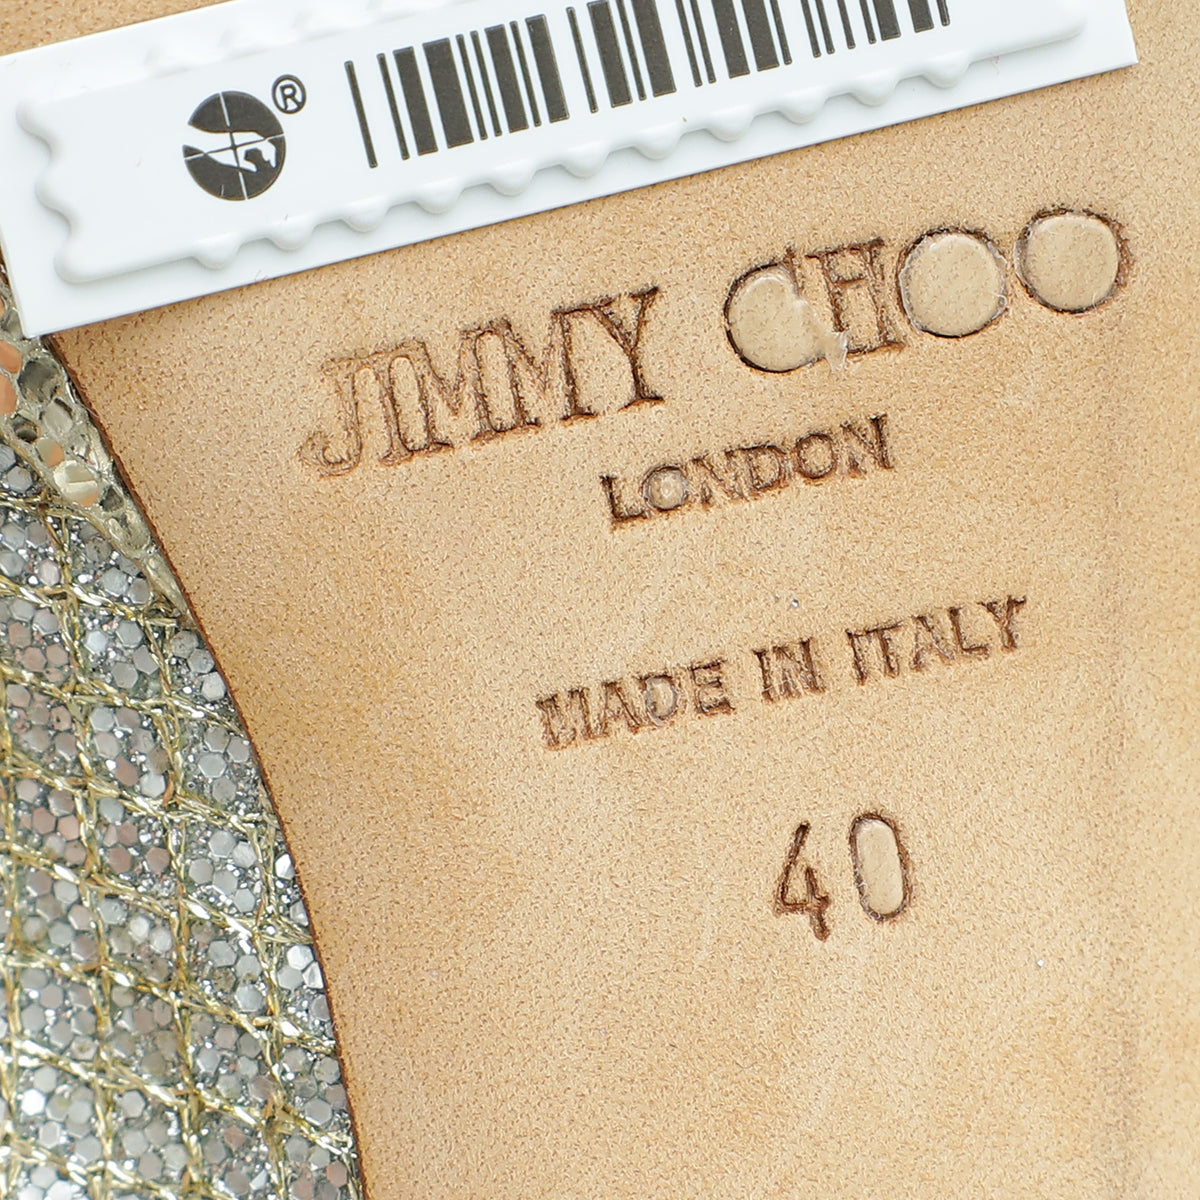 Jimmy Choo Metallic Light Gold Glitter Peep Toe Slingback 40